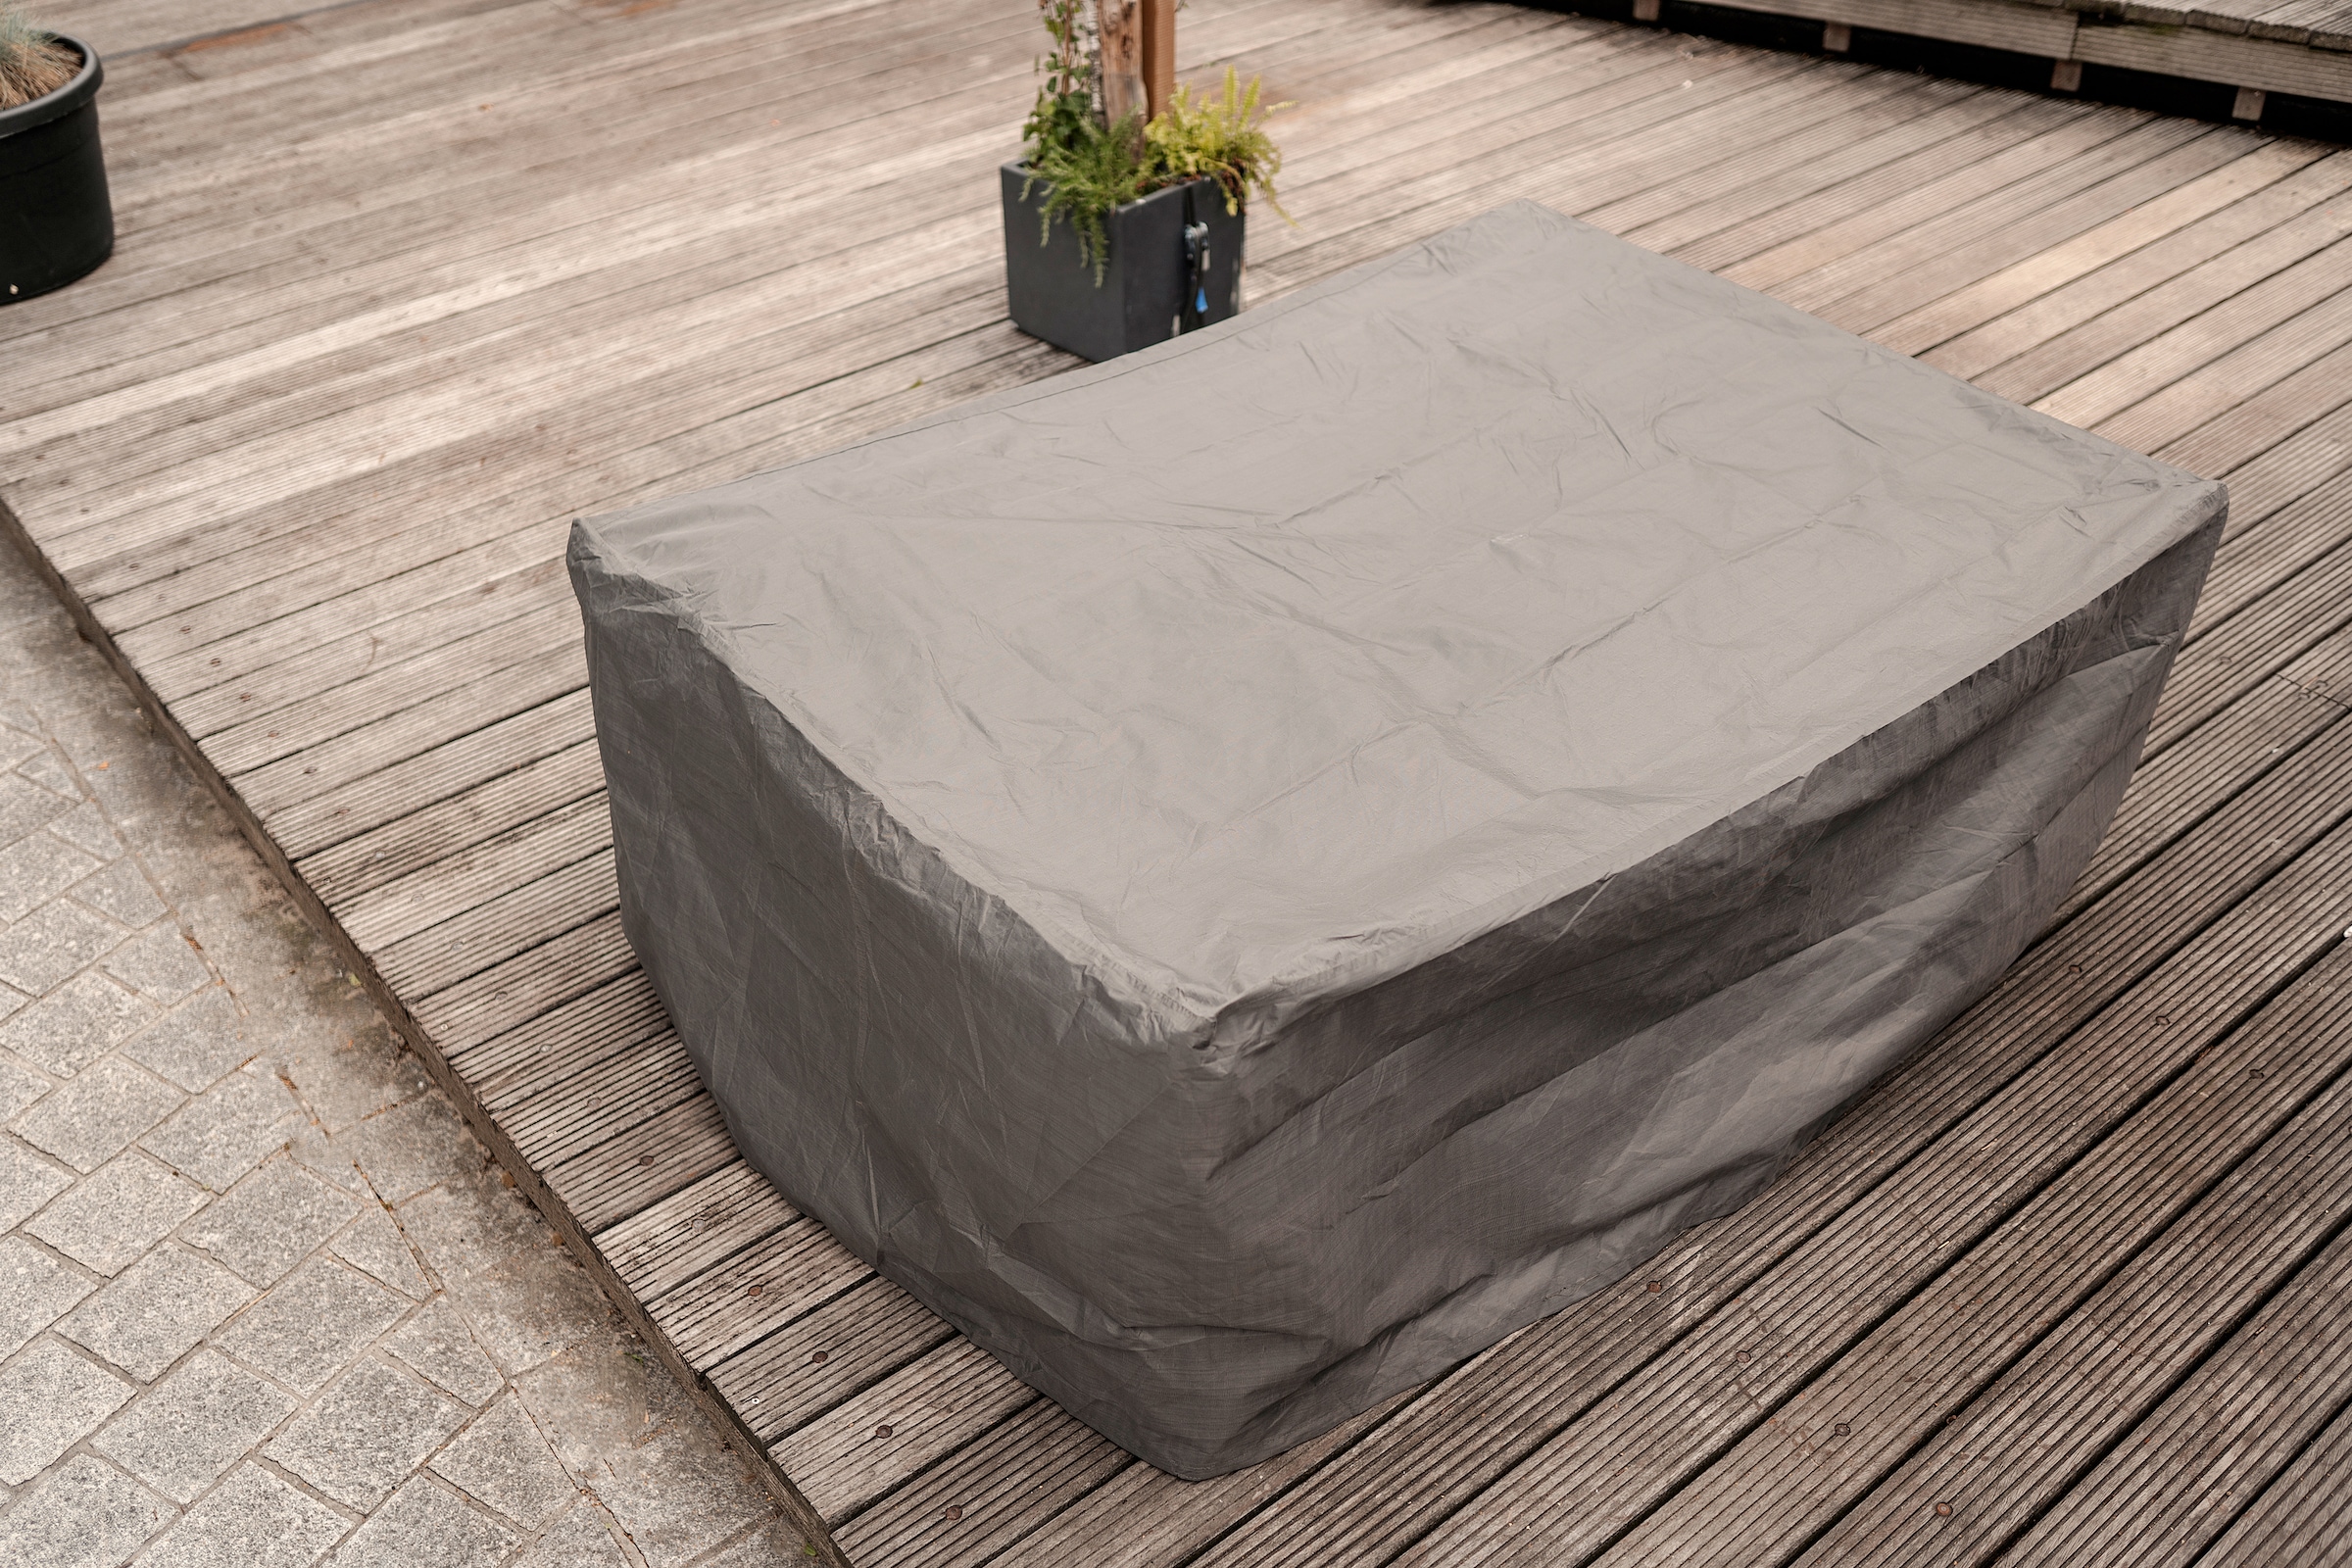 winza outdoor covers Gartenmöbel-Schutzhülle, geeignet für Loungeset, 240x180x75 cm